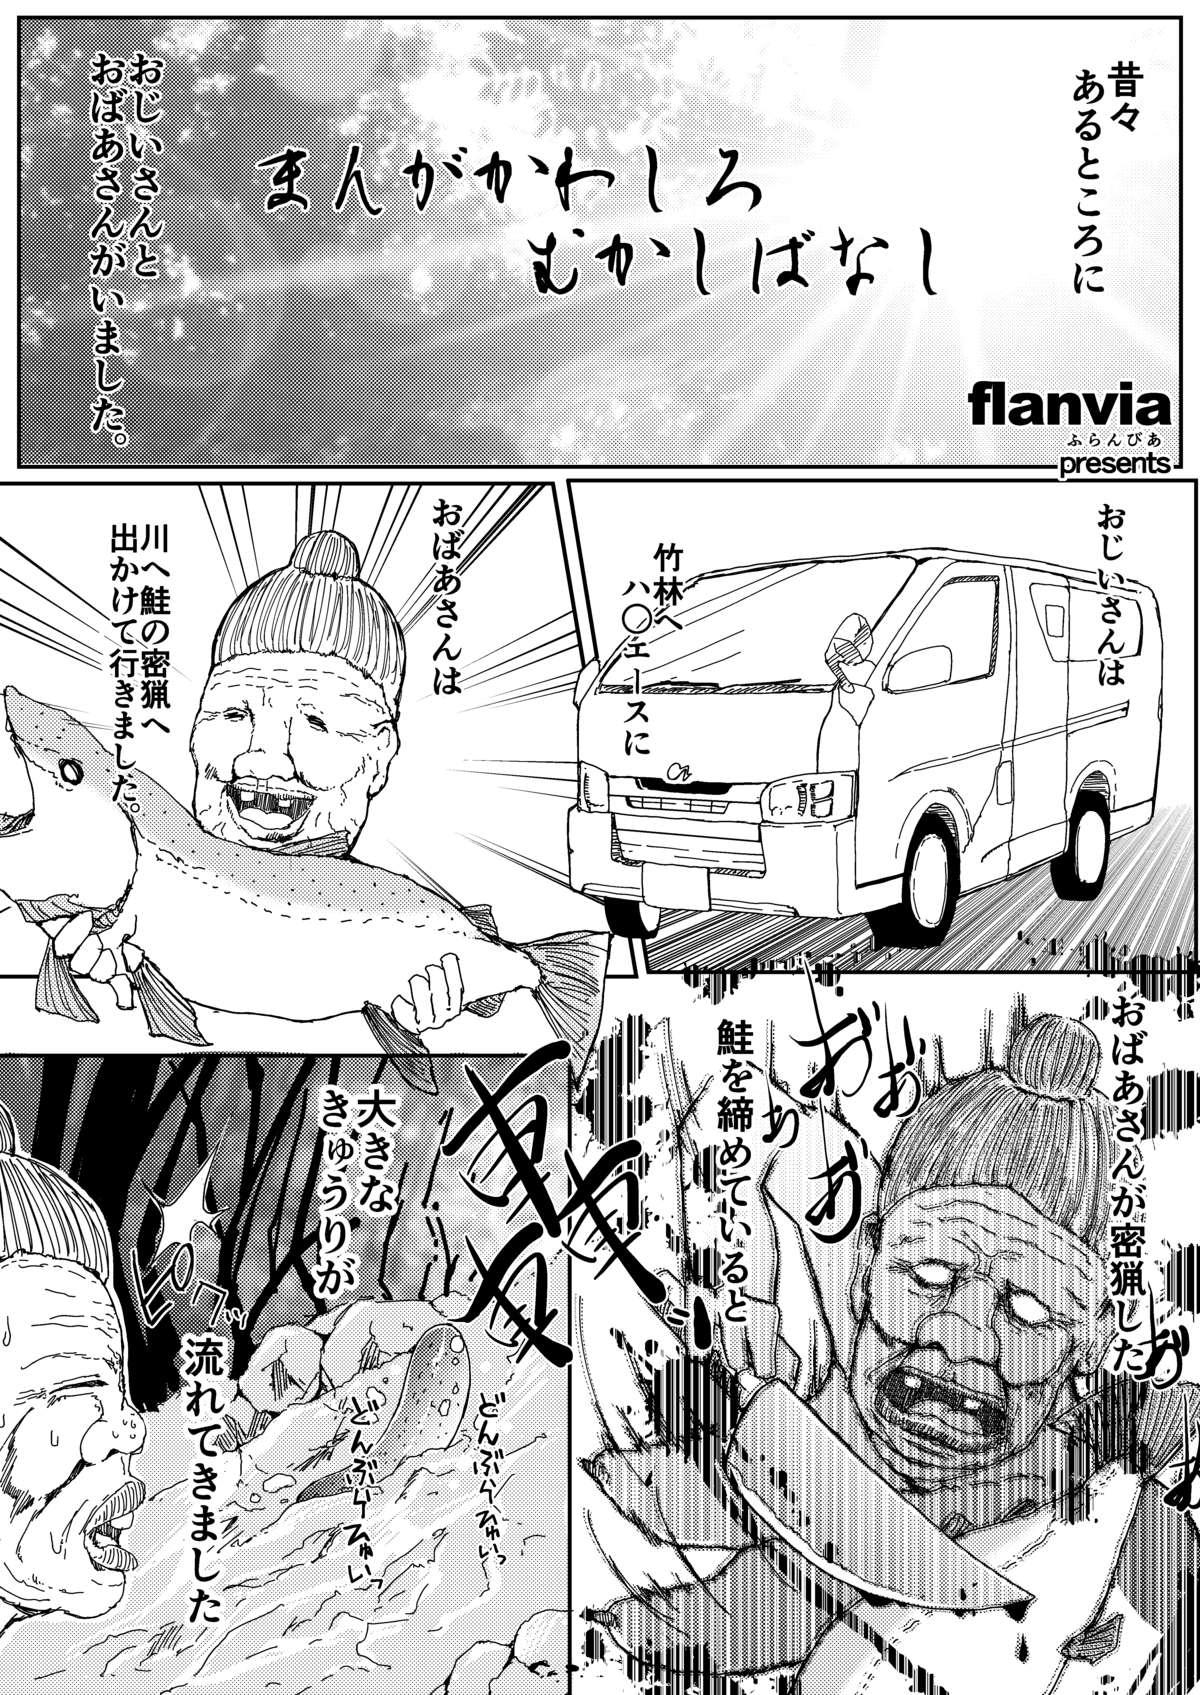 Manga Kawashiro Folktale 1